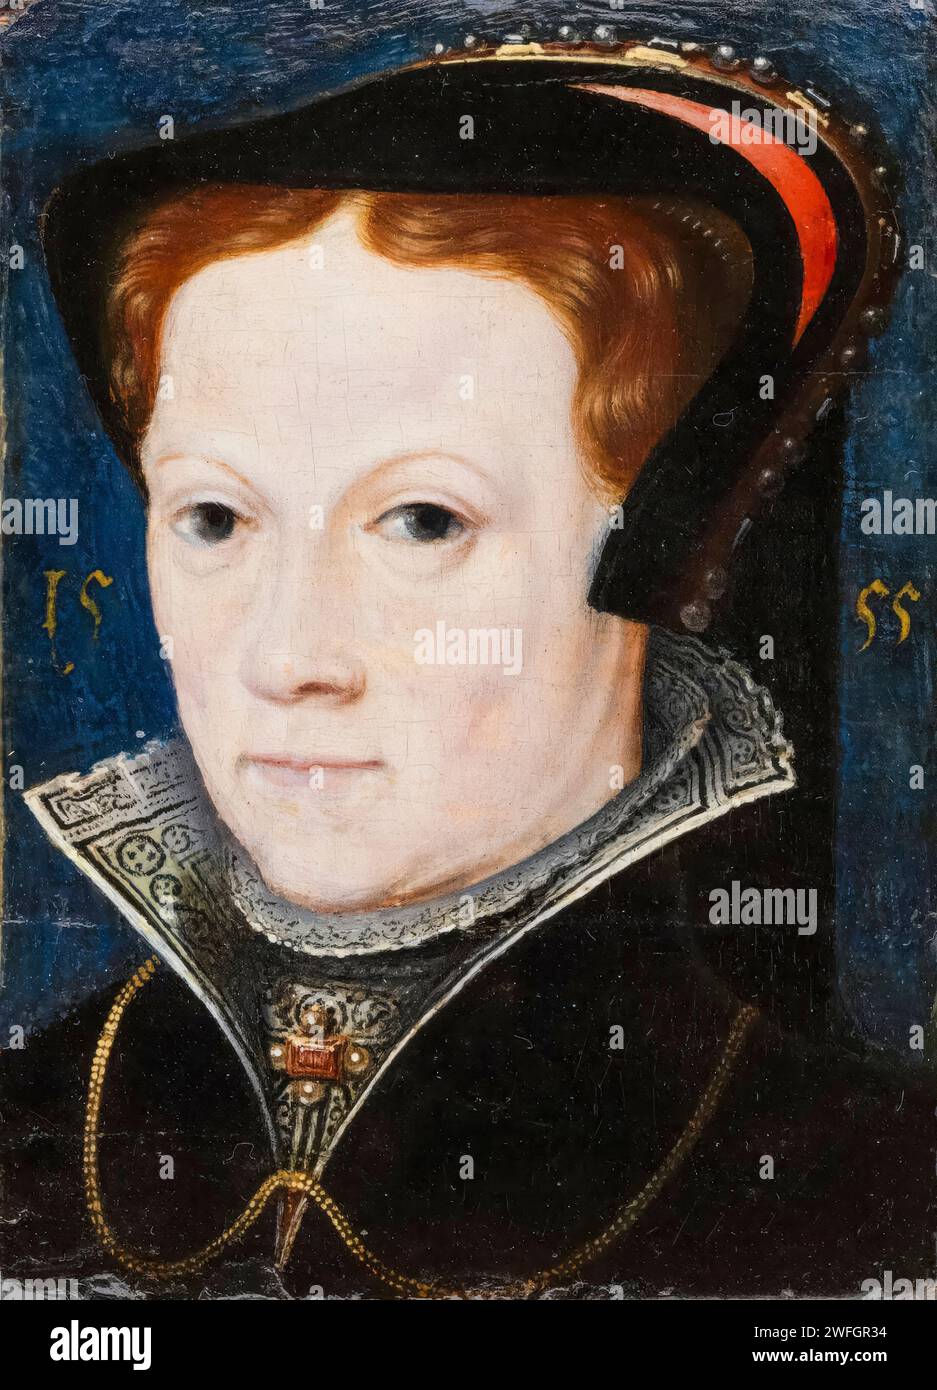 Regina Maria i, d'Inghilterra, (1516-1558), nota come "Bloody Mary", ritratto a olio su tavola dopo Anthonis Mor, 1555 Foto Stock